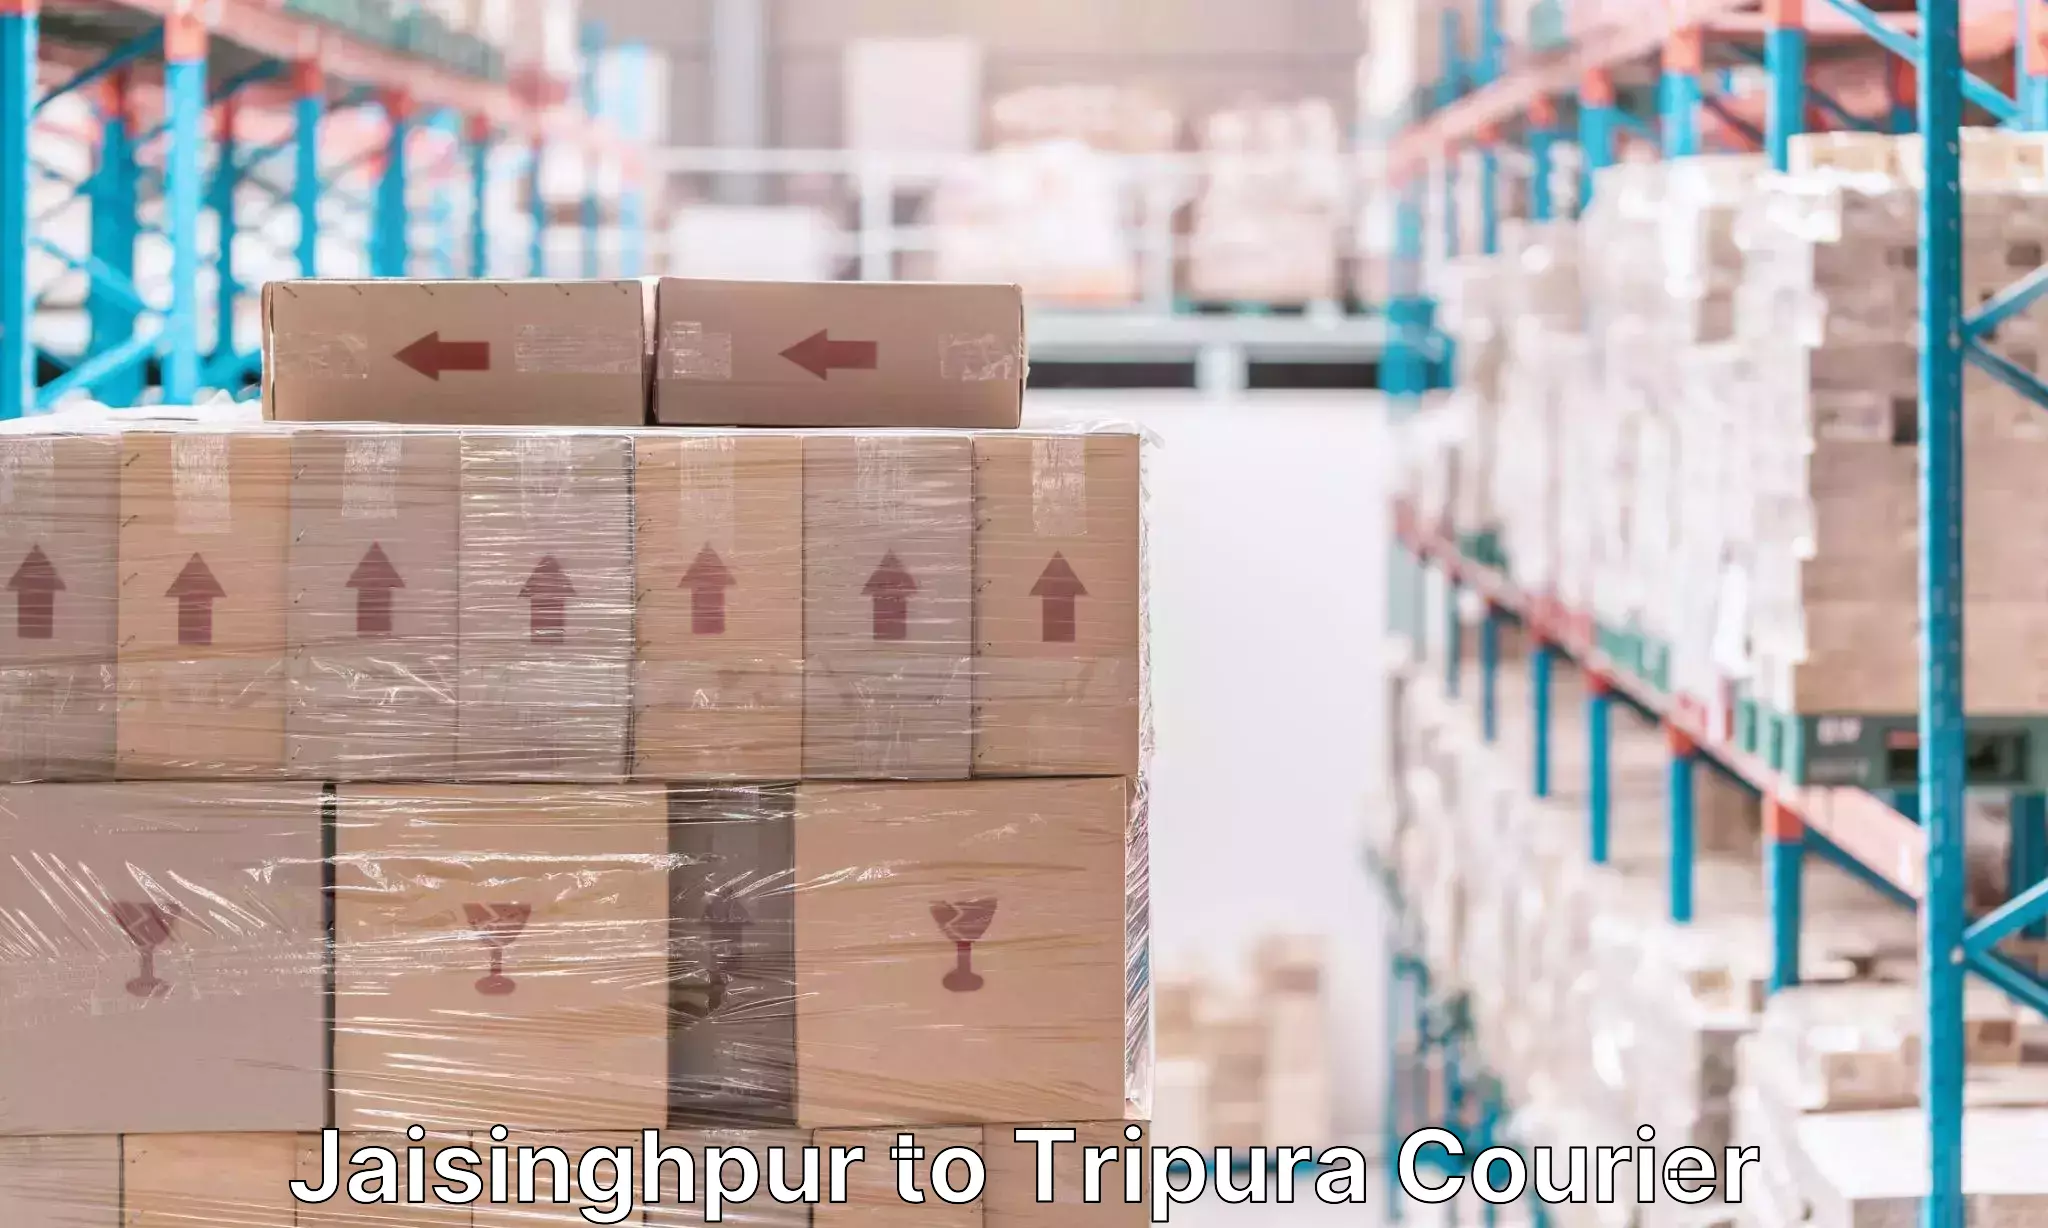 Urgent luggage shipment Jaisinghpur to Udaipur Tripura